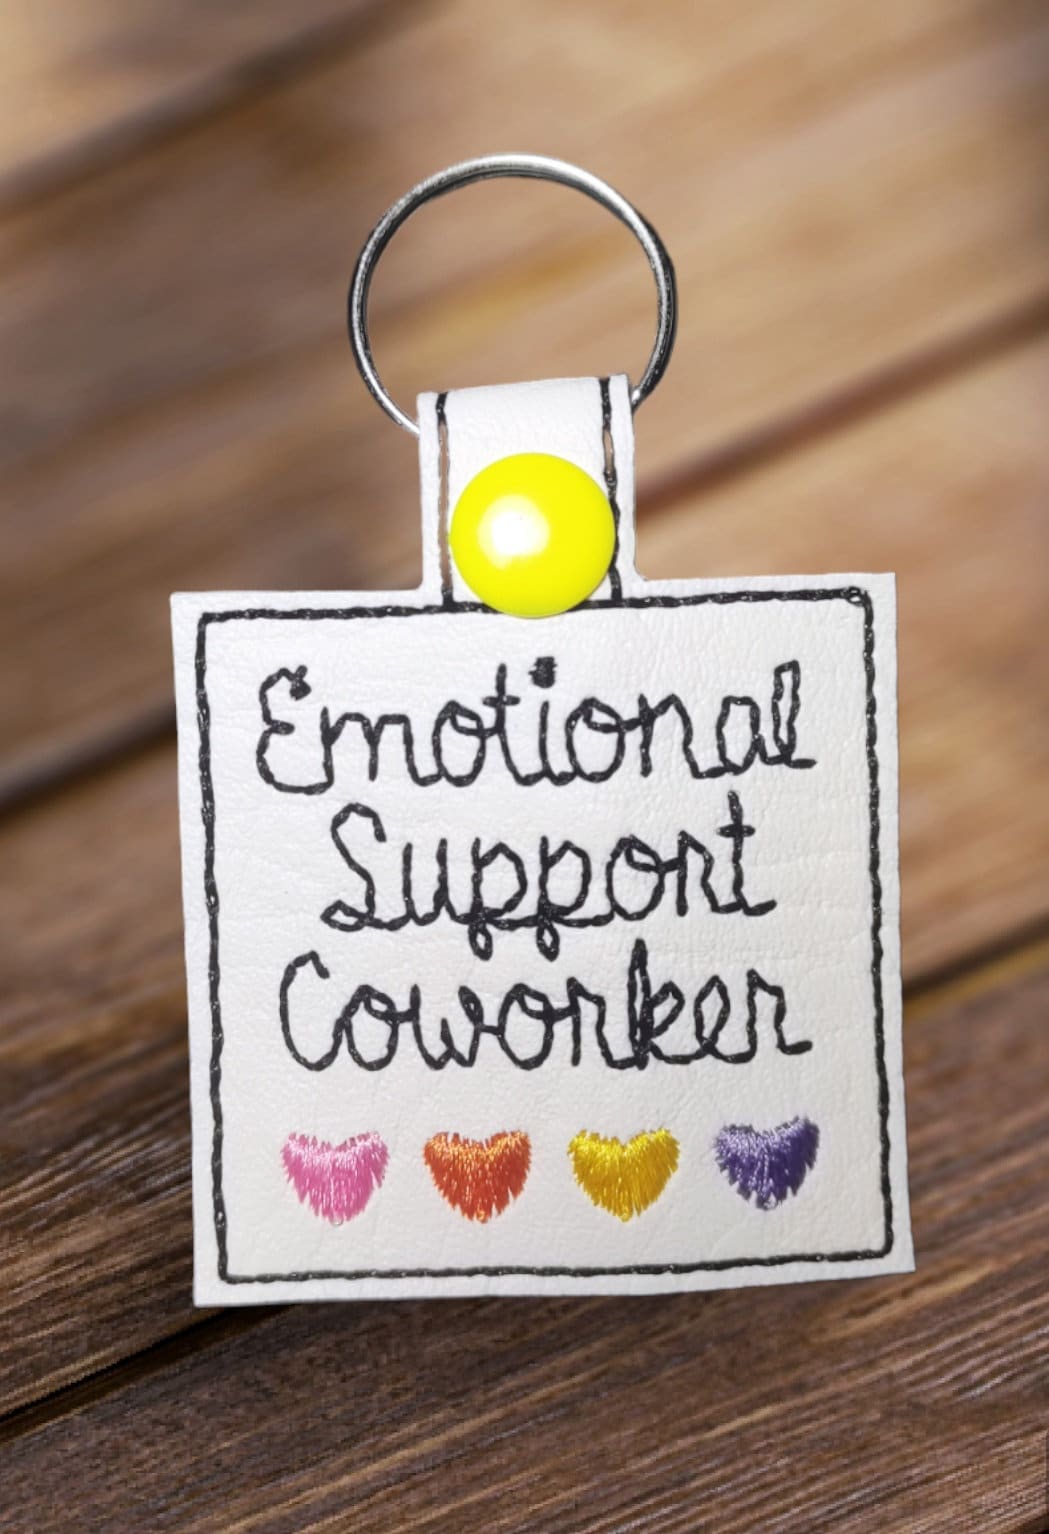 TheShoutOutShop Emotional Support Coworker Keychain, Emotional Support Key Chain, Emotional Support Key Ring, Coworker Keyring